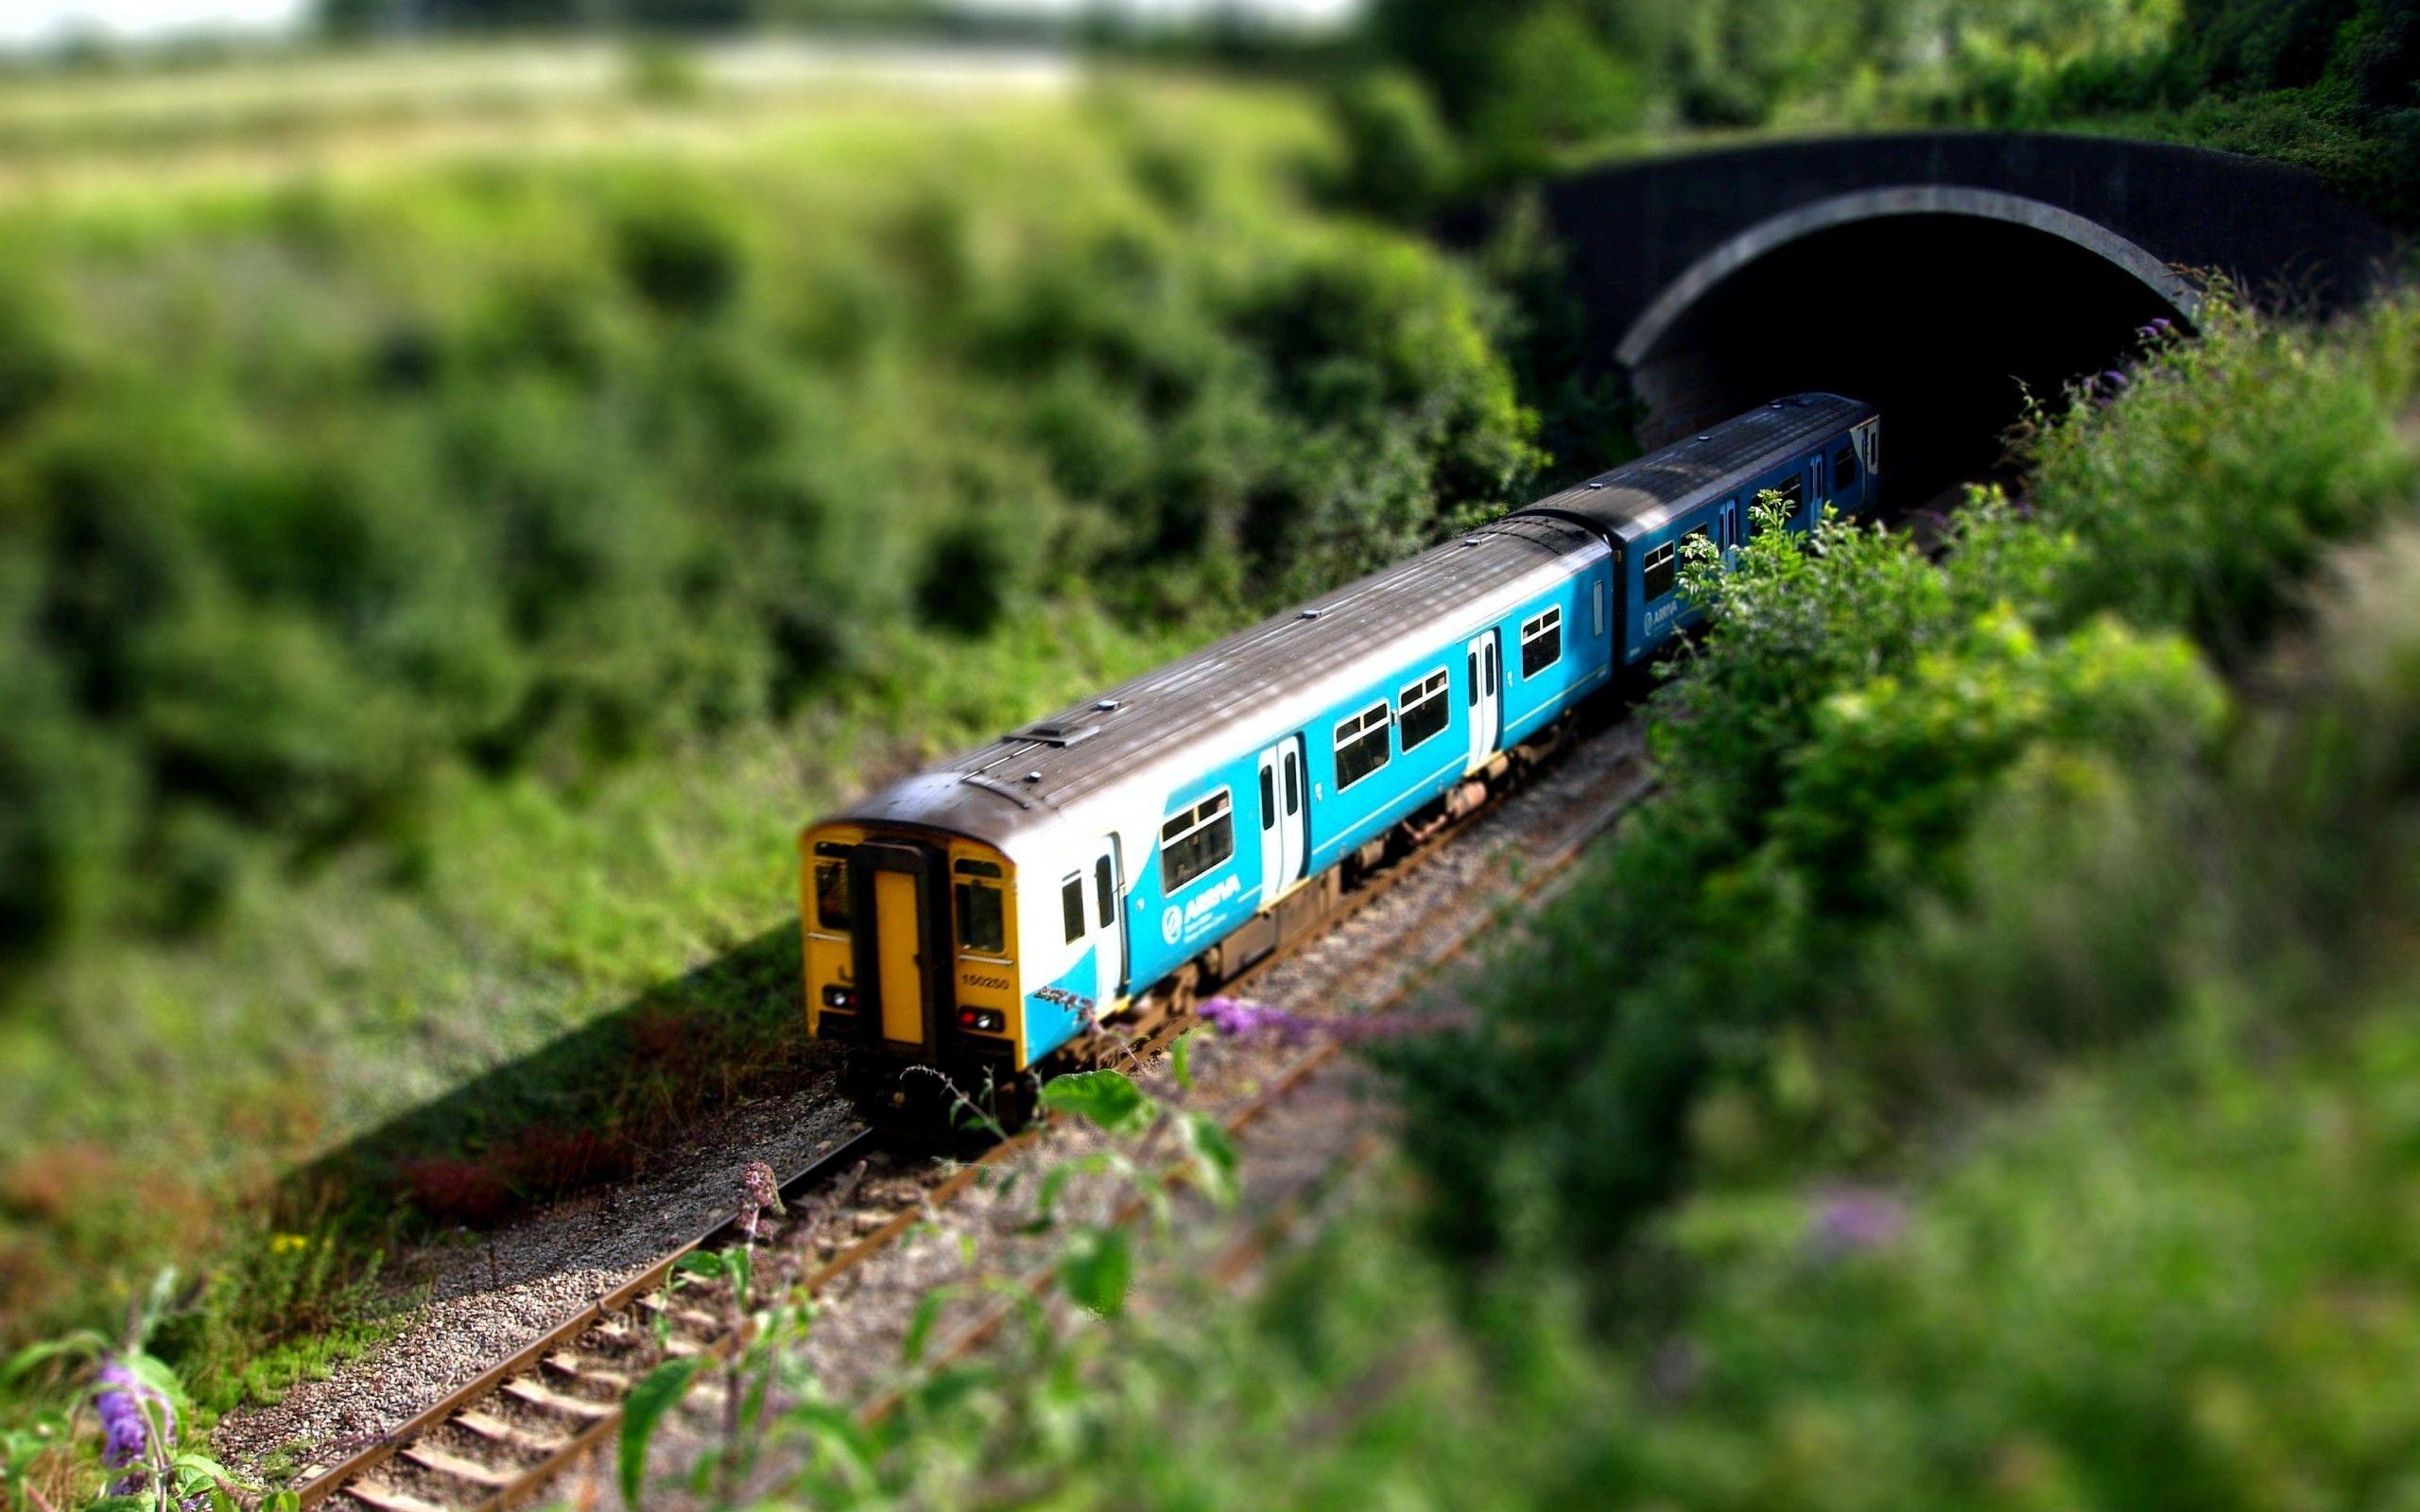 Train HD Wallpaper Image Picture Photo Download